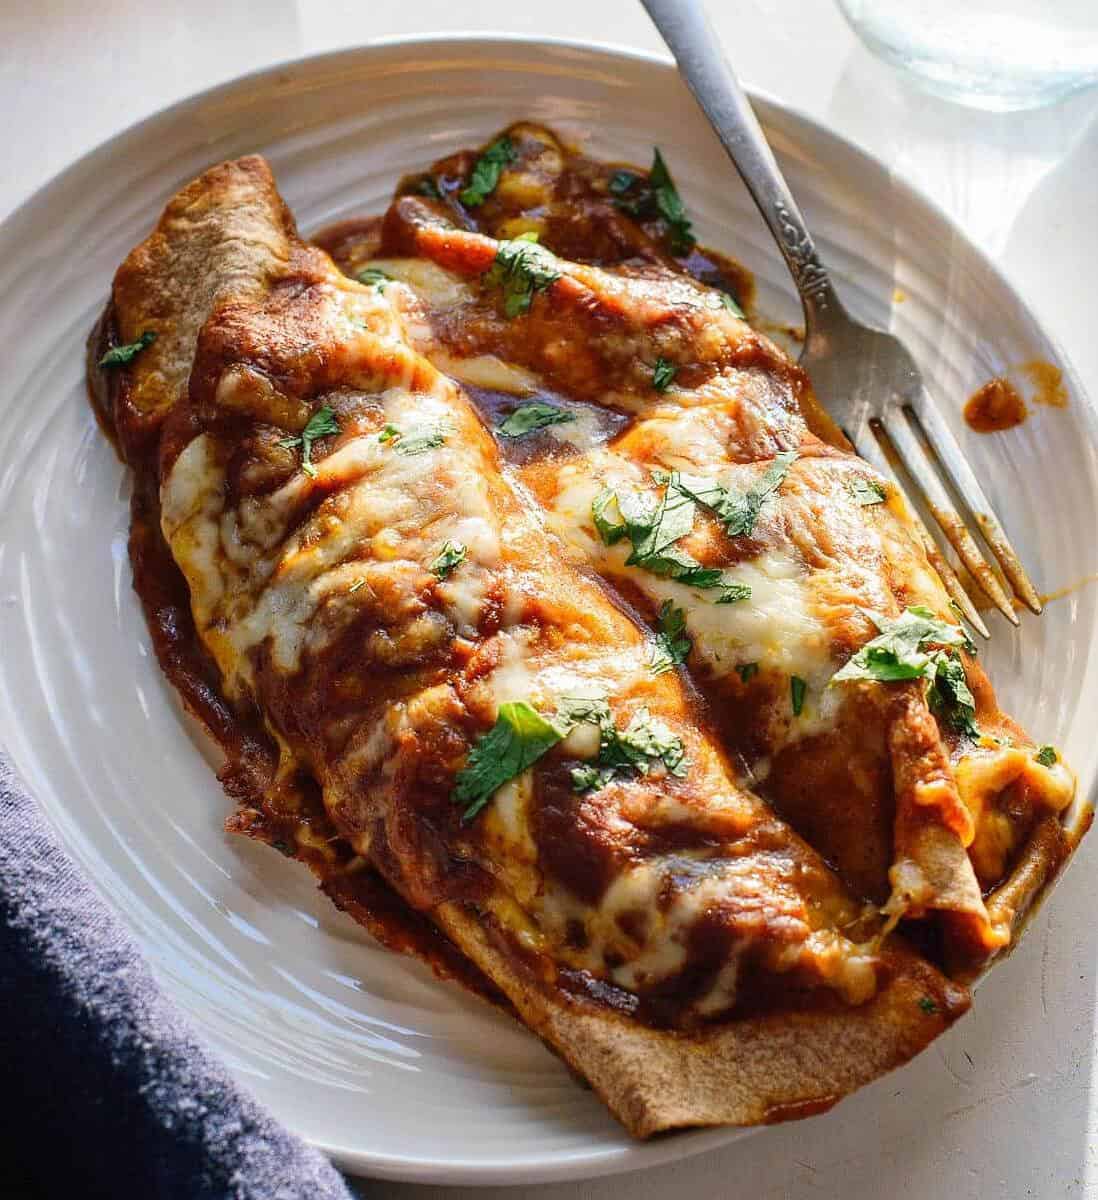  Delicious vegetarian enchiladas loaded with flavor